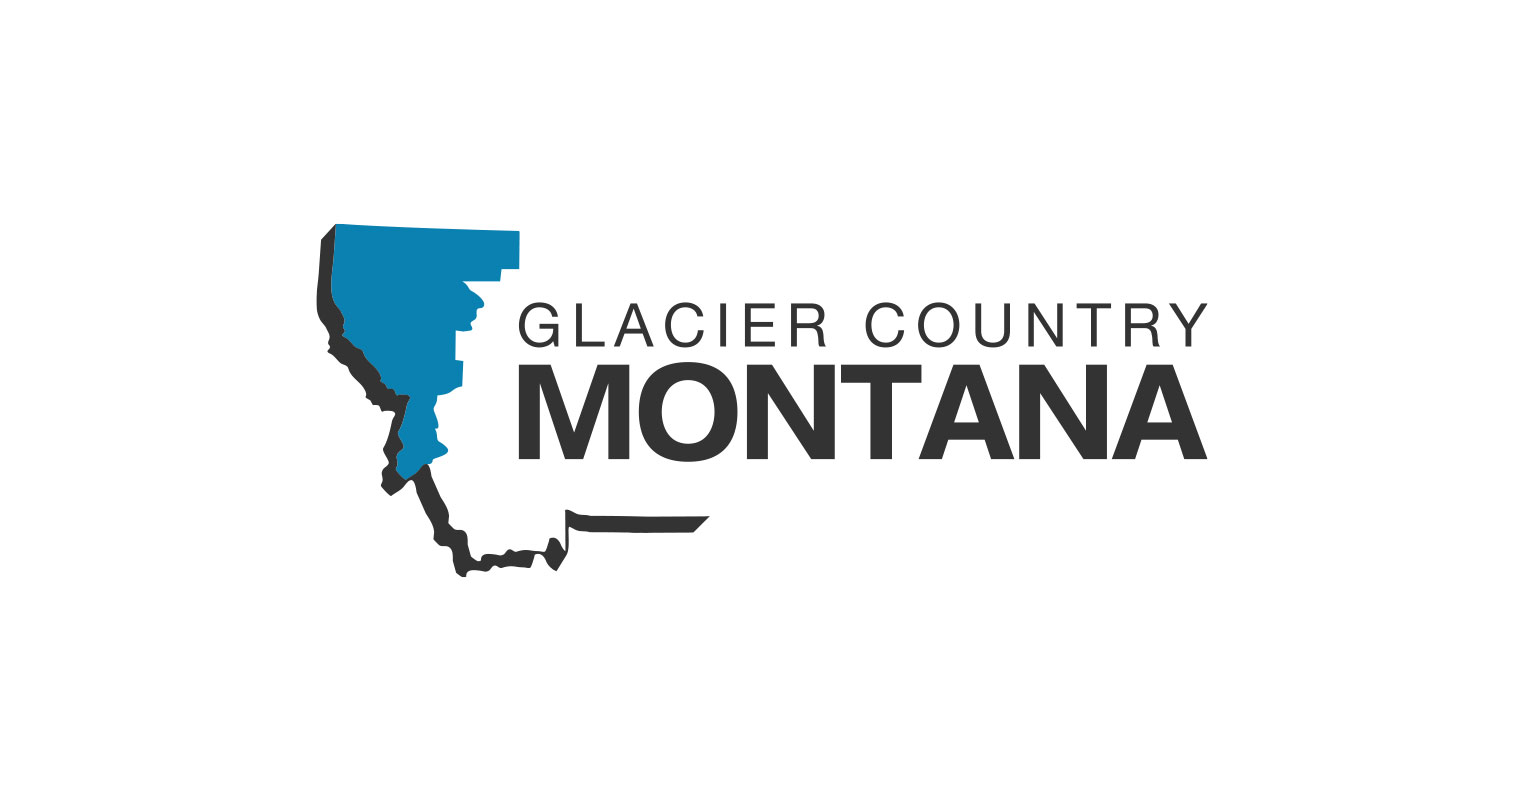 Western Montana’s Glacier Country